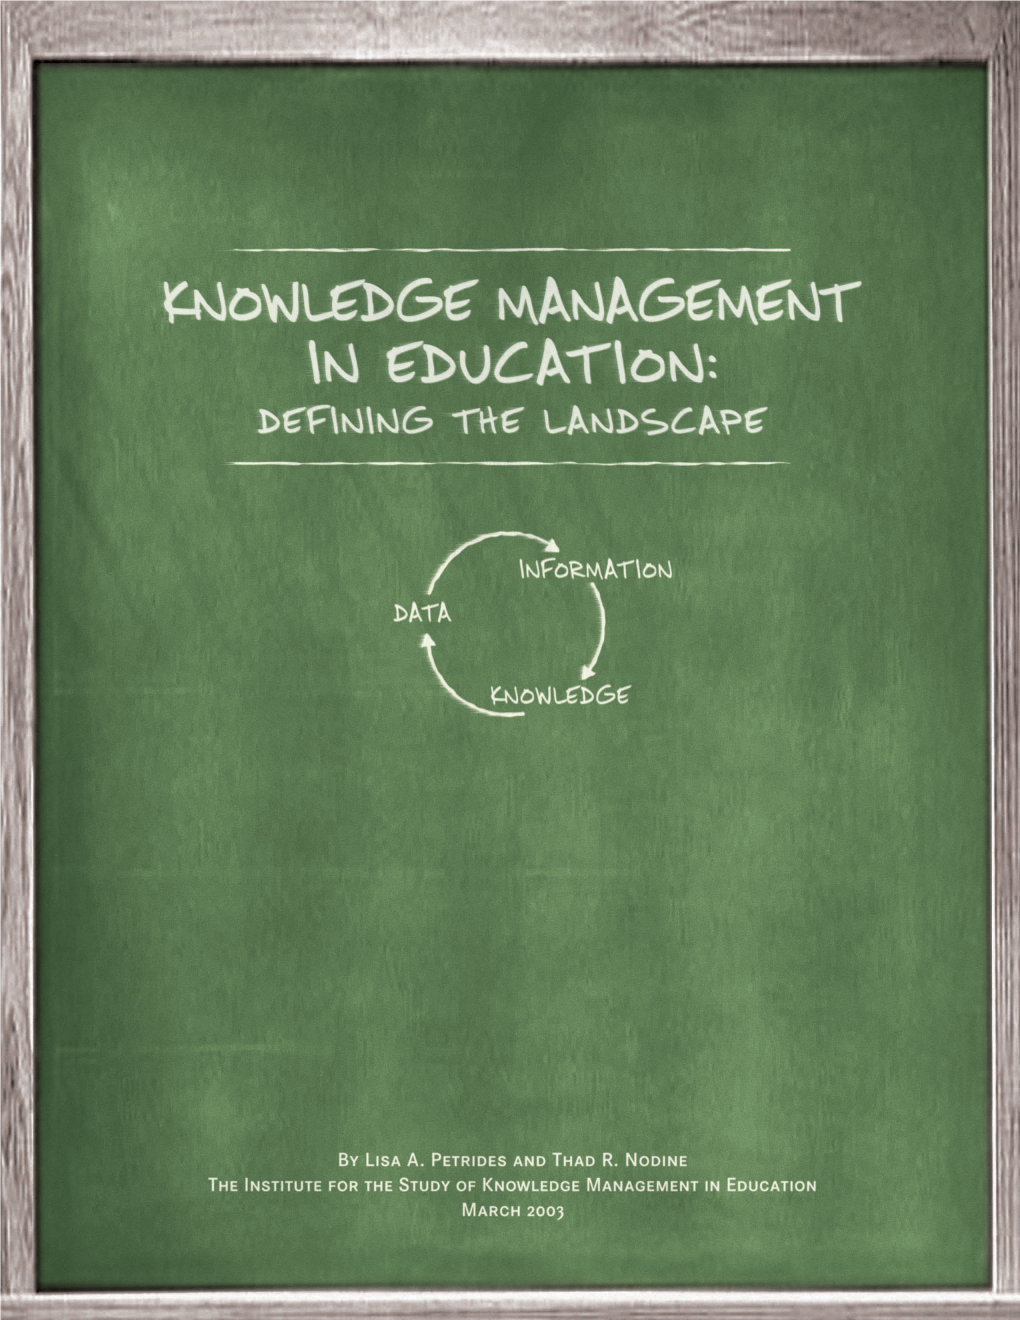 Knowledge Management in Education 1 Mirada Road Half Moon Bay, CA 94019